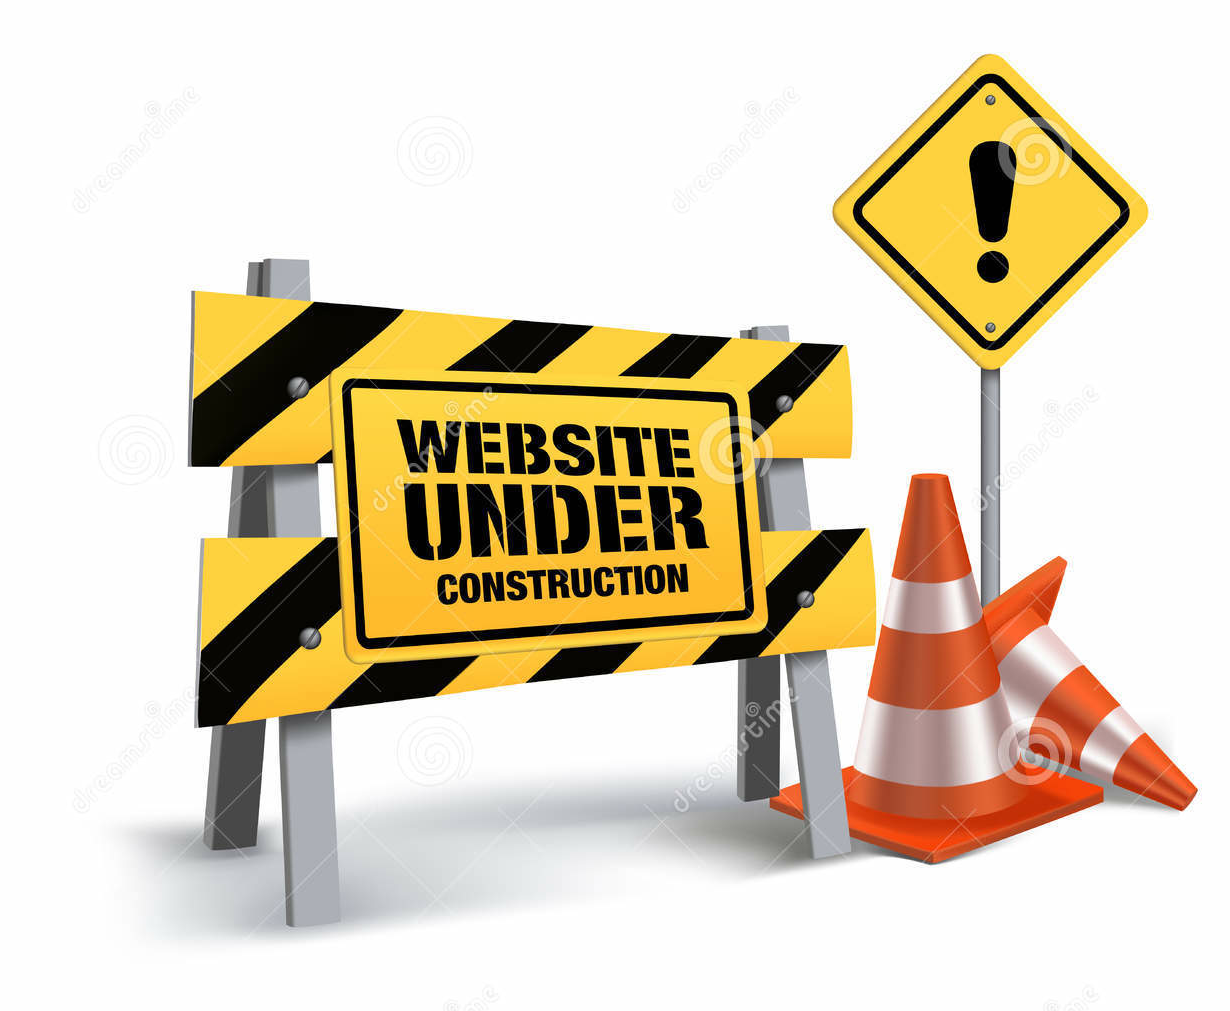 web under construction image